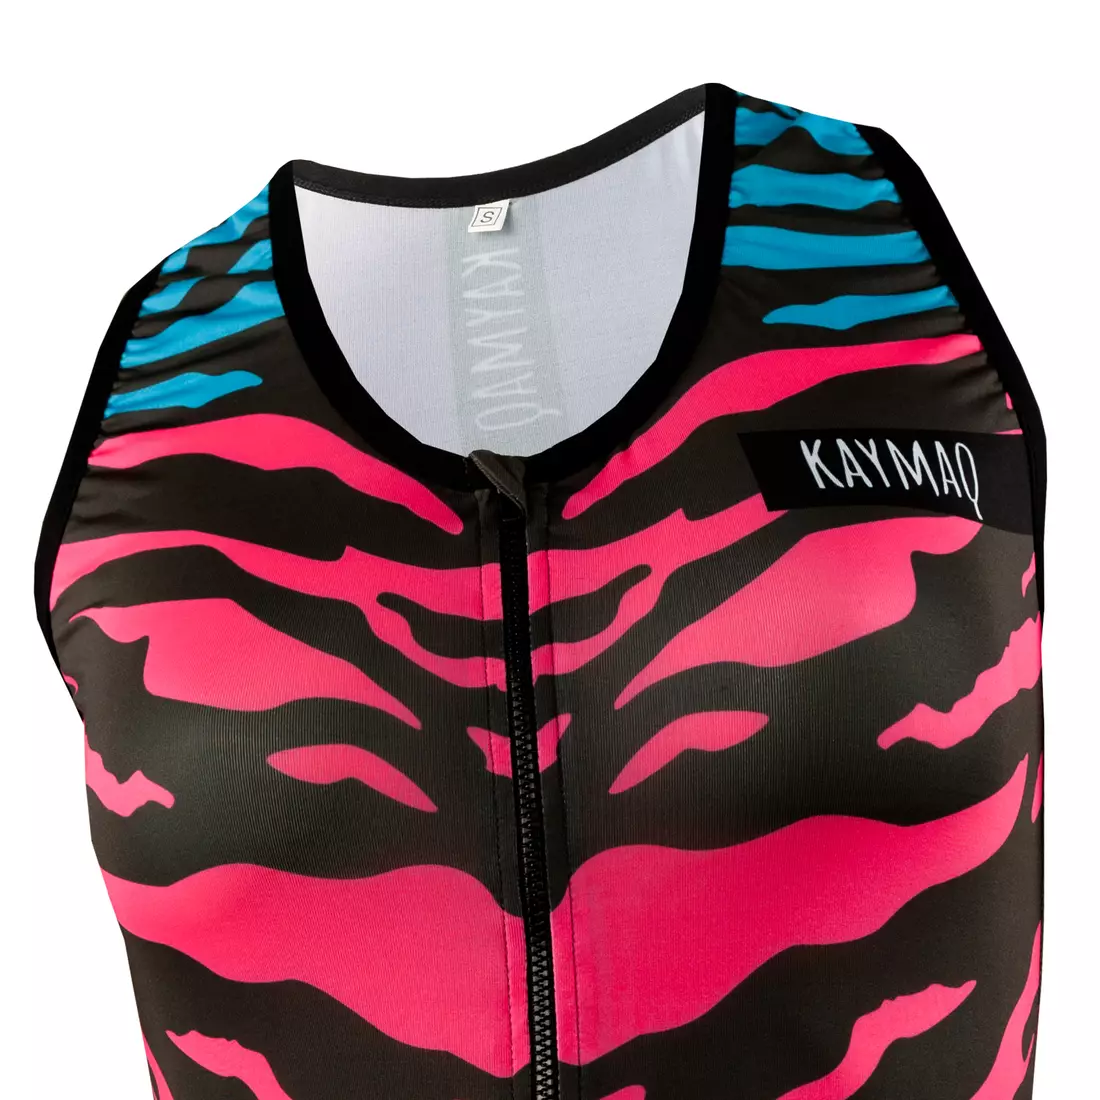 KAYMAQ DESIGN W1-W40 women's sleeveless cycling t-shirt